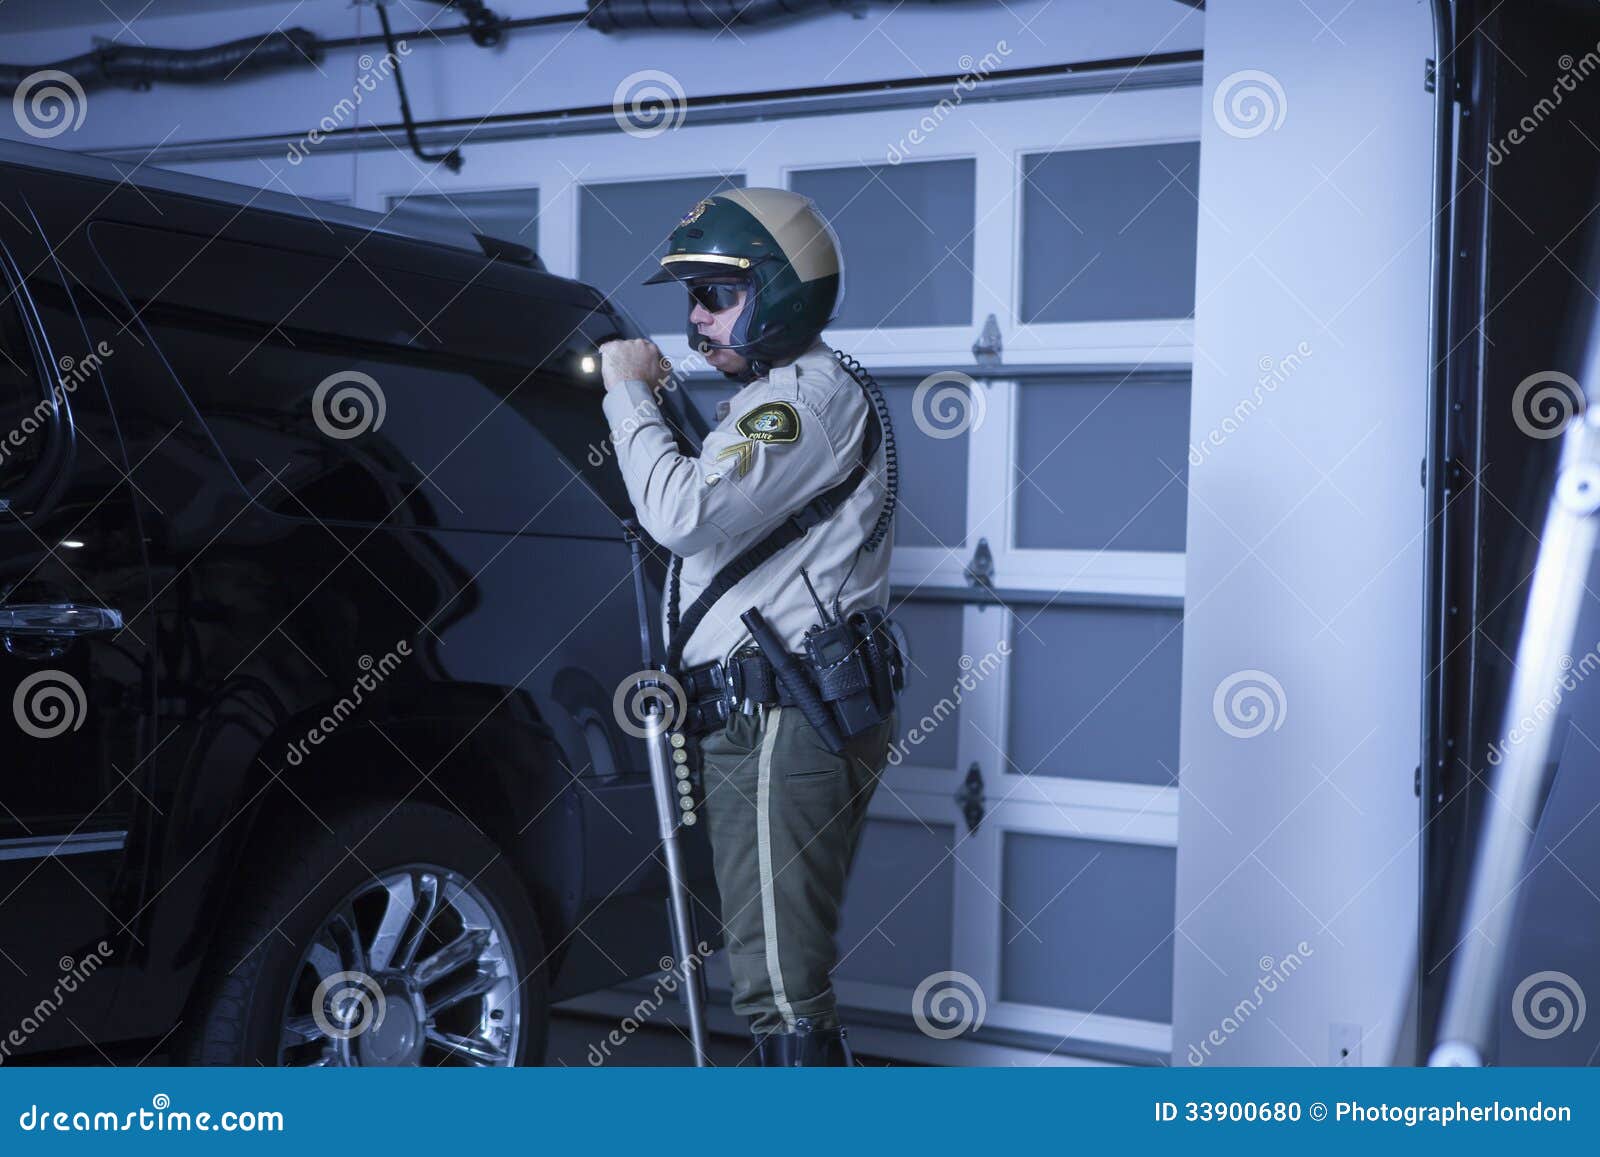 policeman with flashlight investigating car in garage